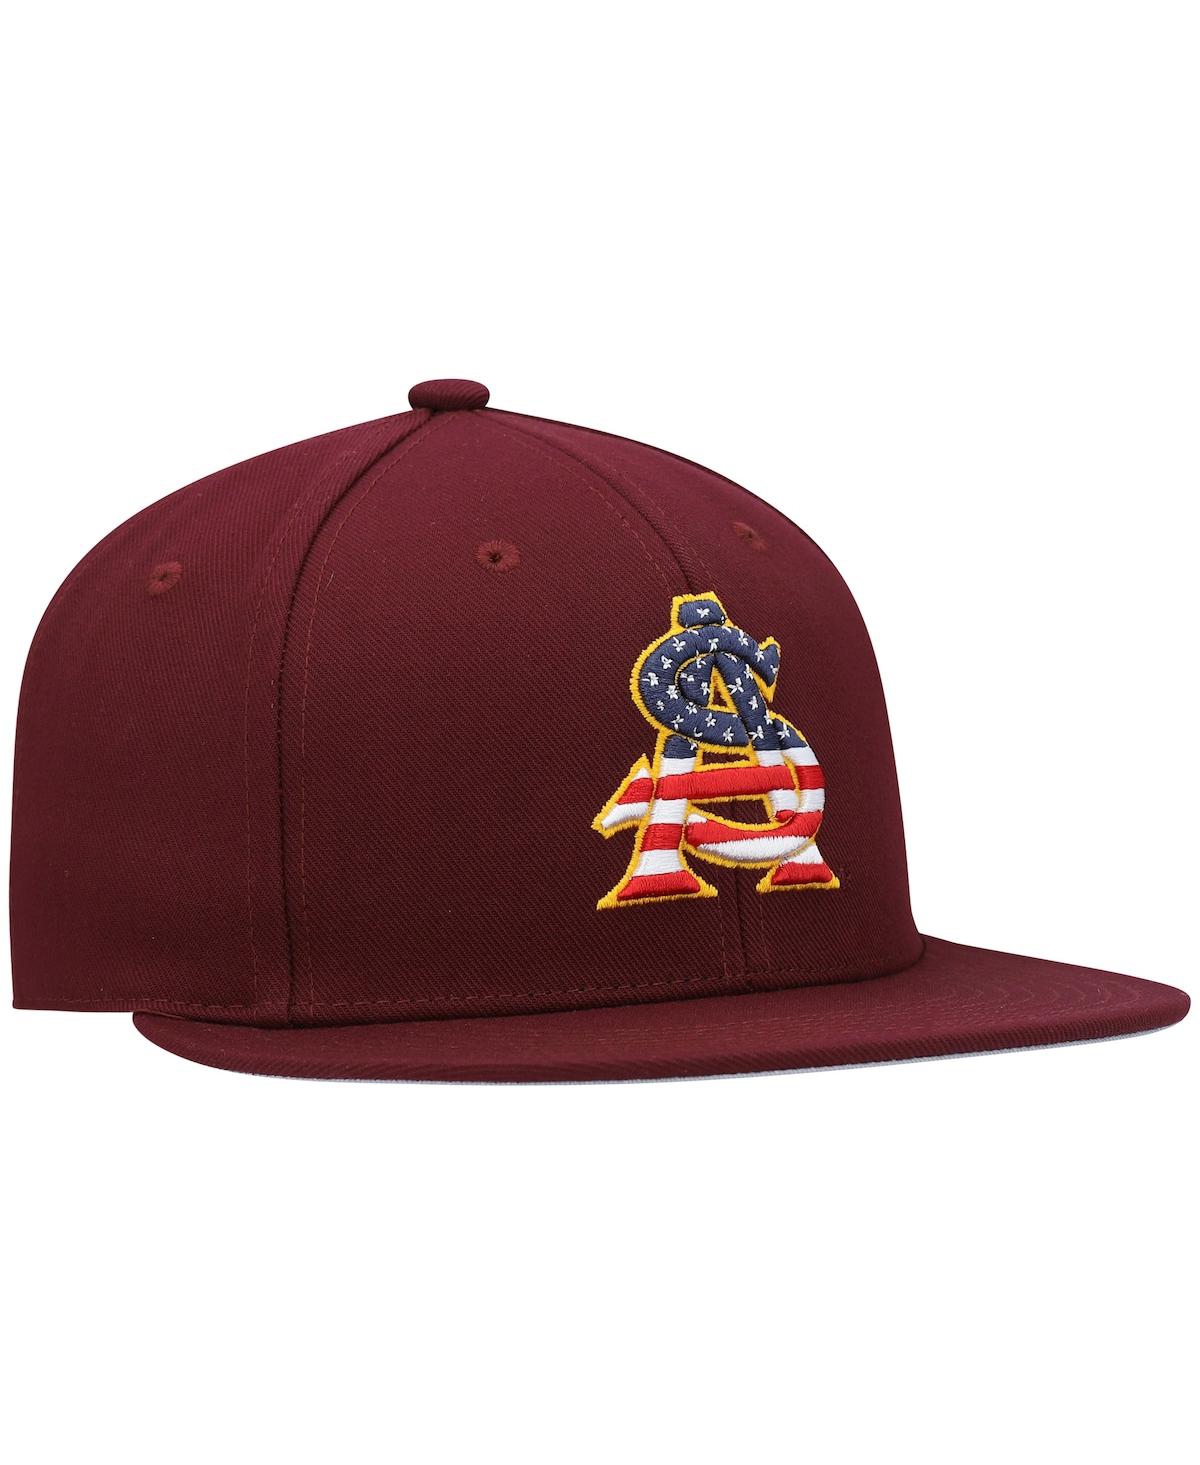 Shop Adidas Originals Men's Adidas Maroon Arizona State Sun Devils Patriotic On-field Baseball Fitted Hat